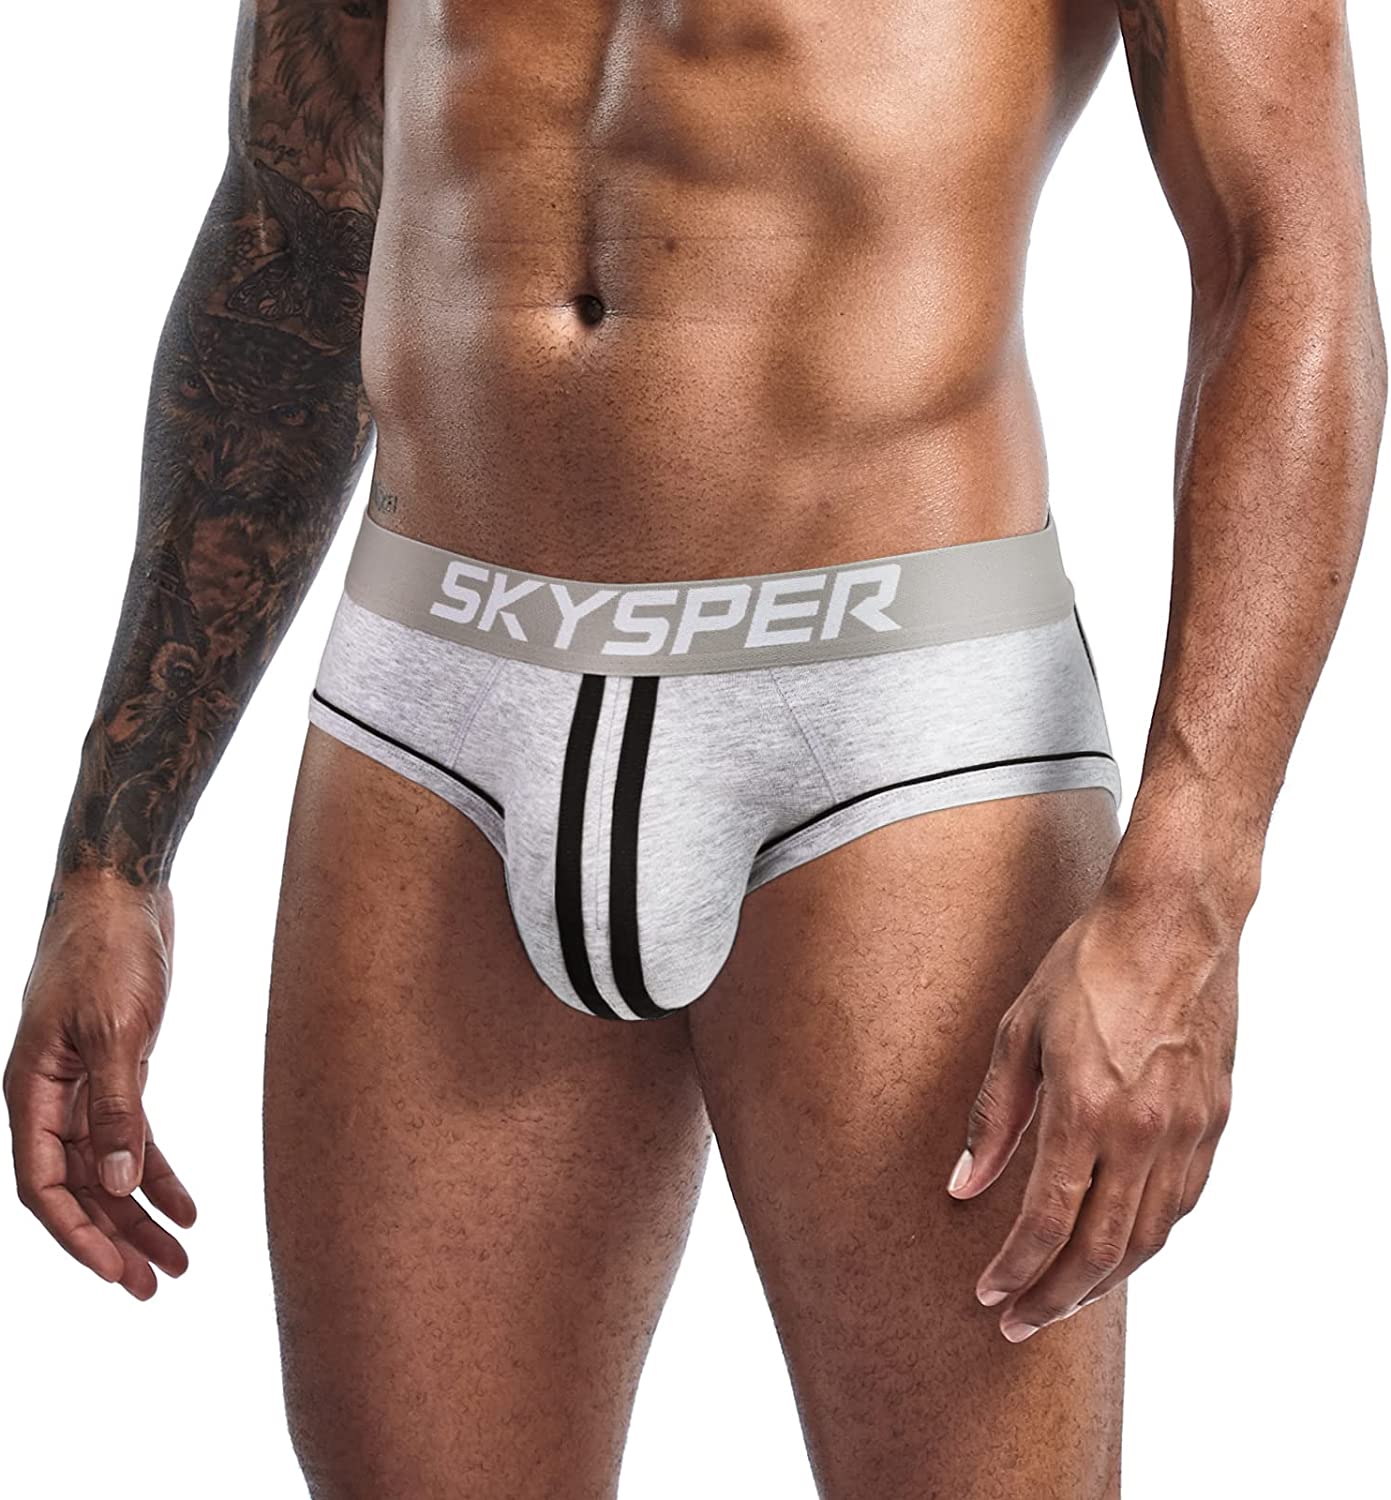 29SK - SKYSPER Men's Cotton Jockstrap Underwear Athletic Supporter